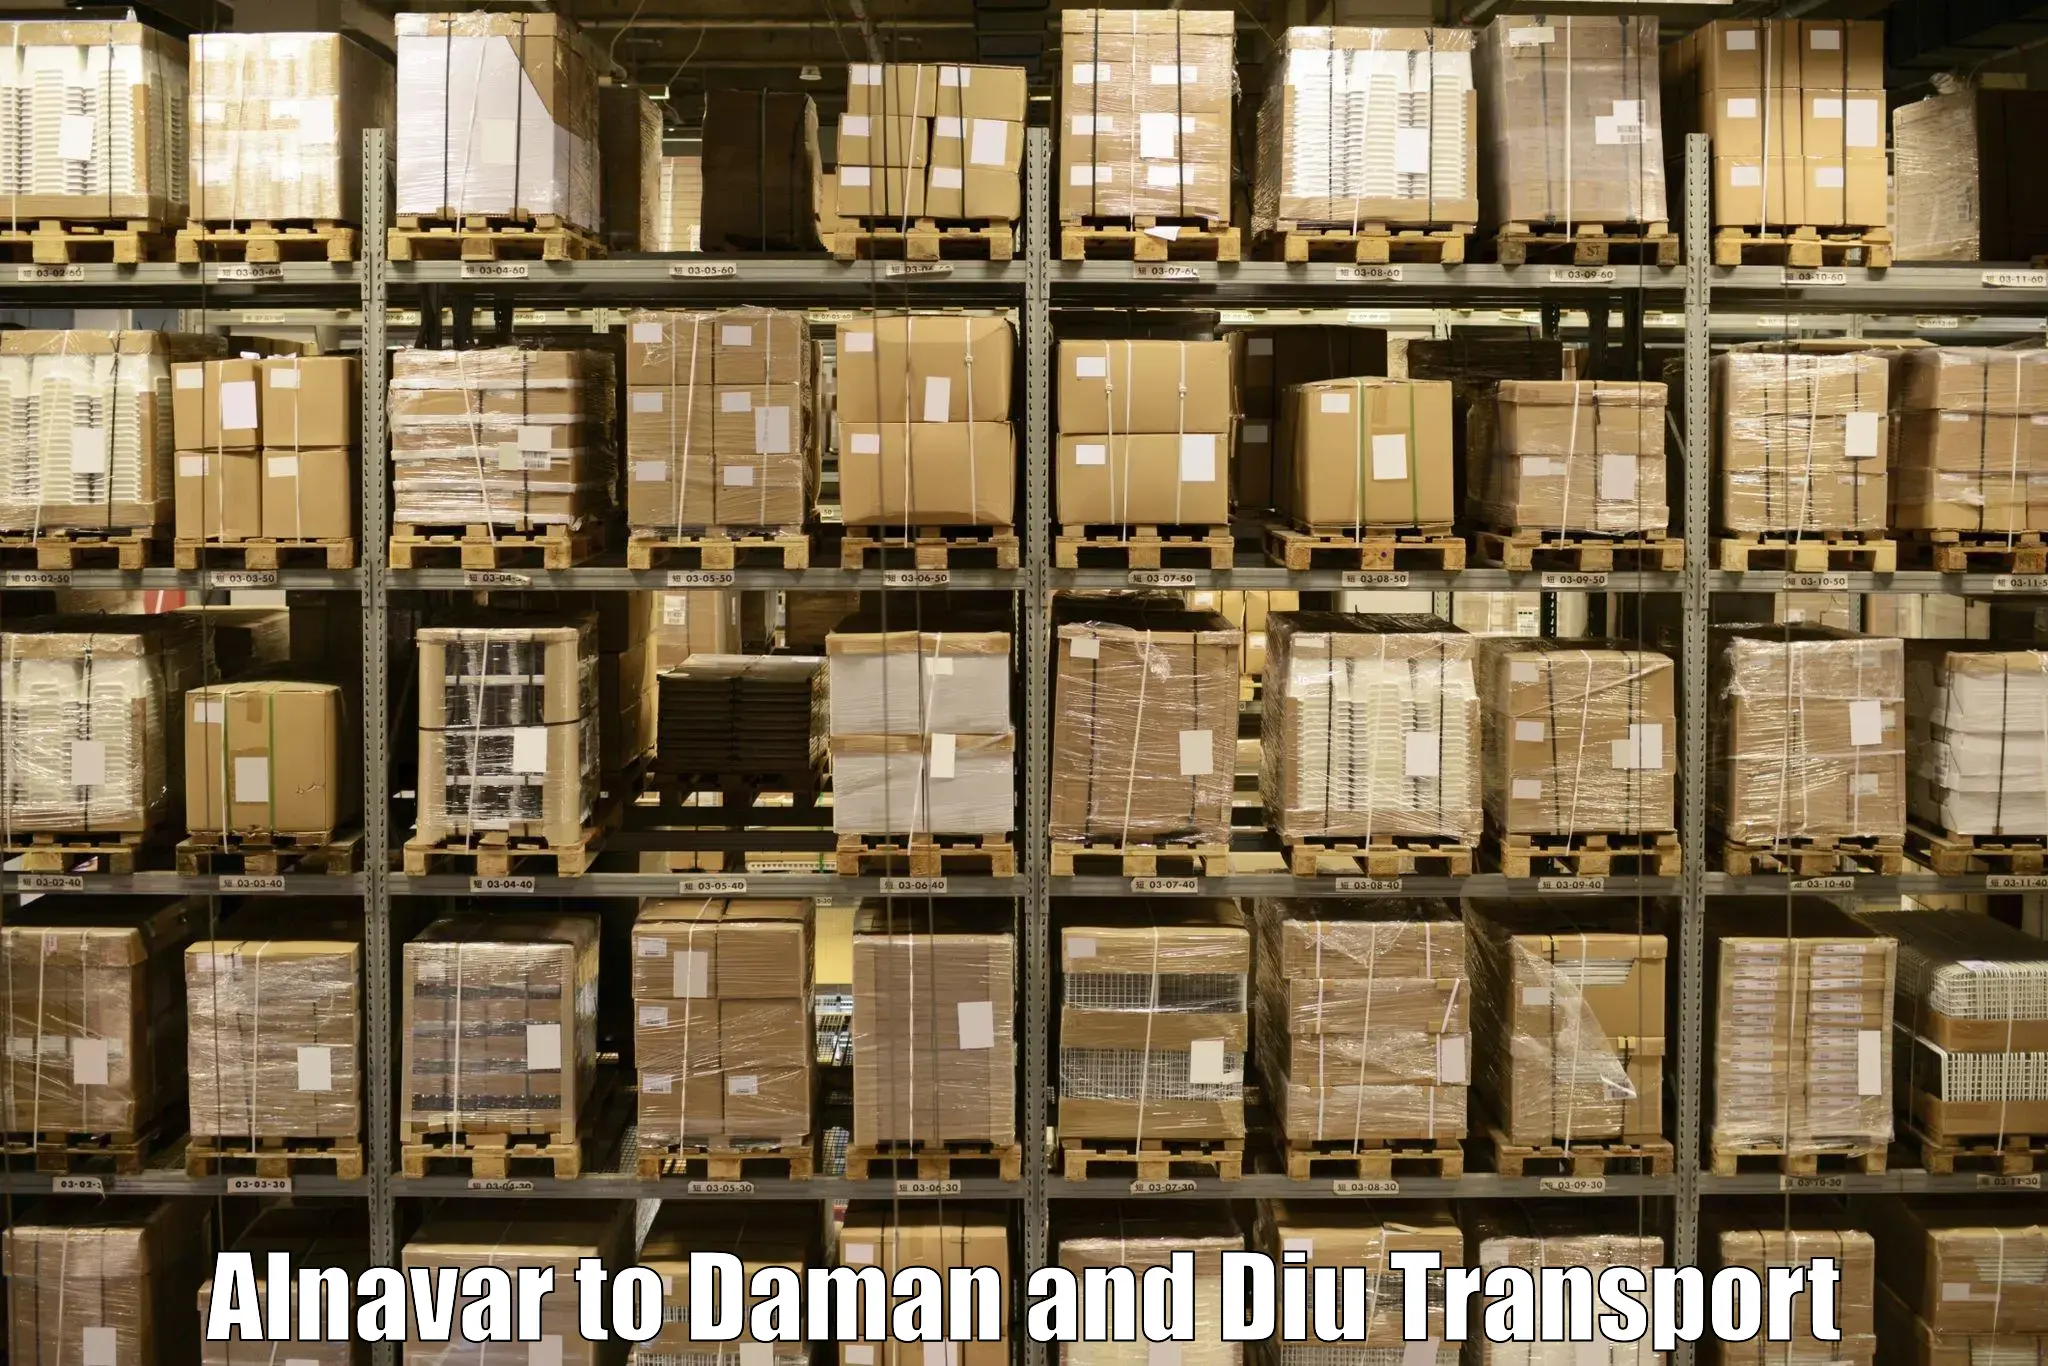 Daily transport service Alnavar to Daman and Diu